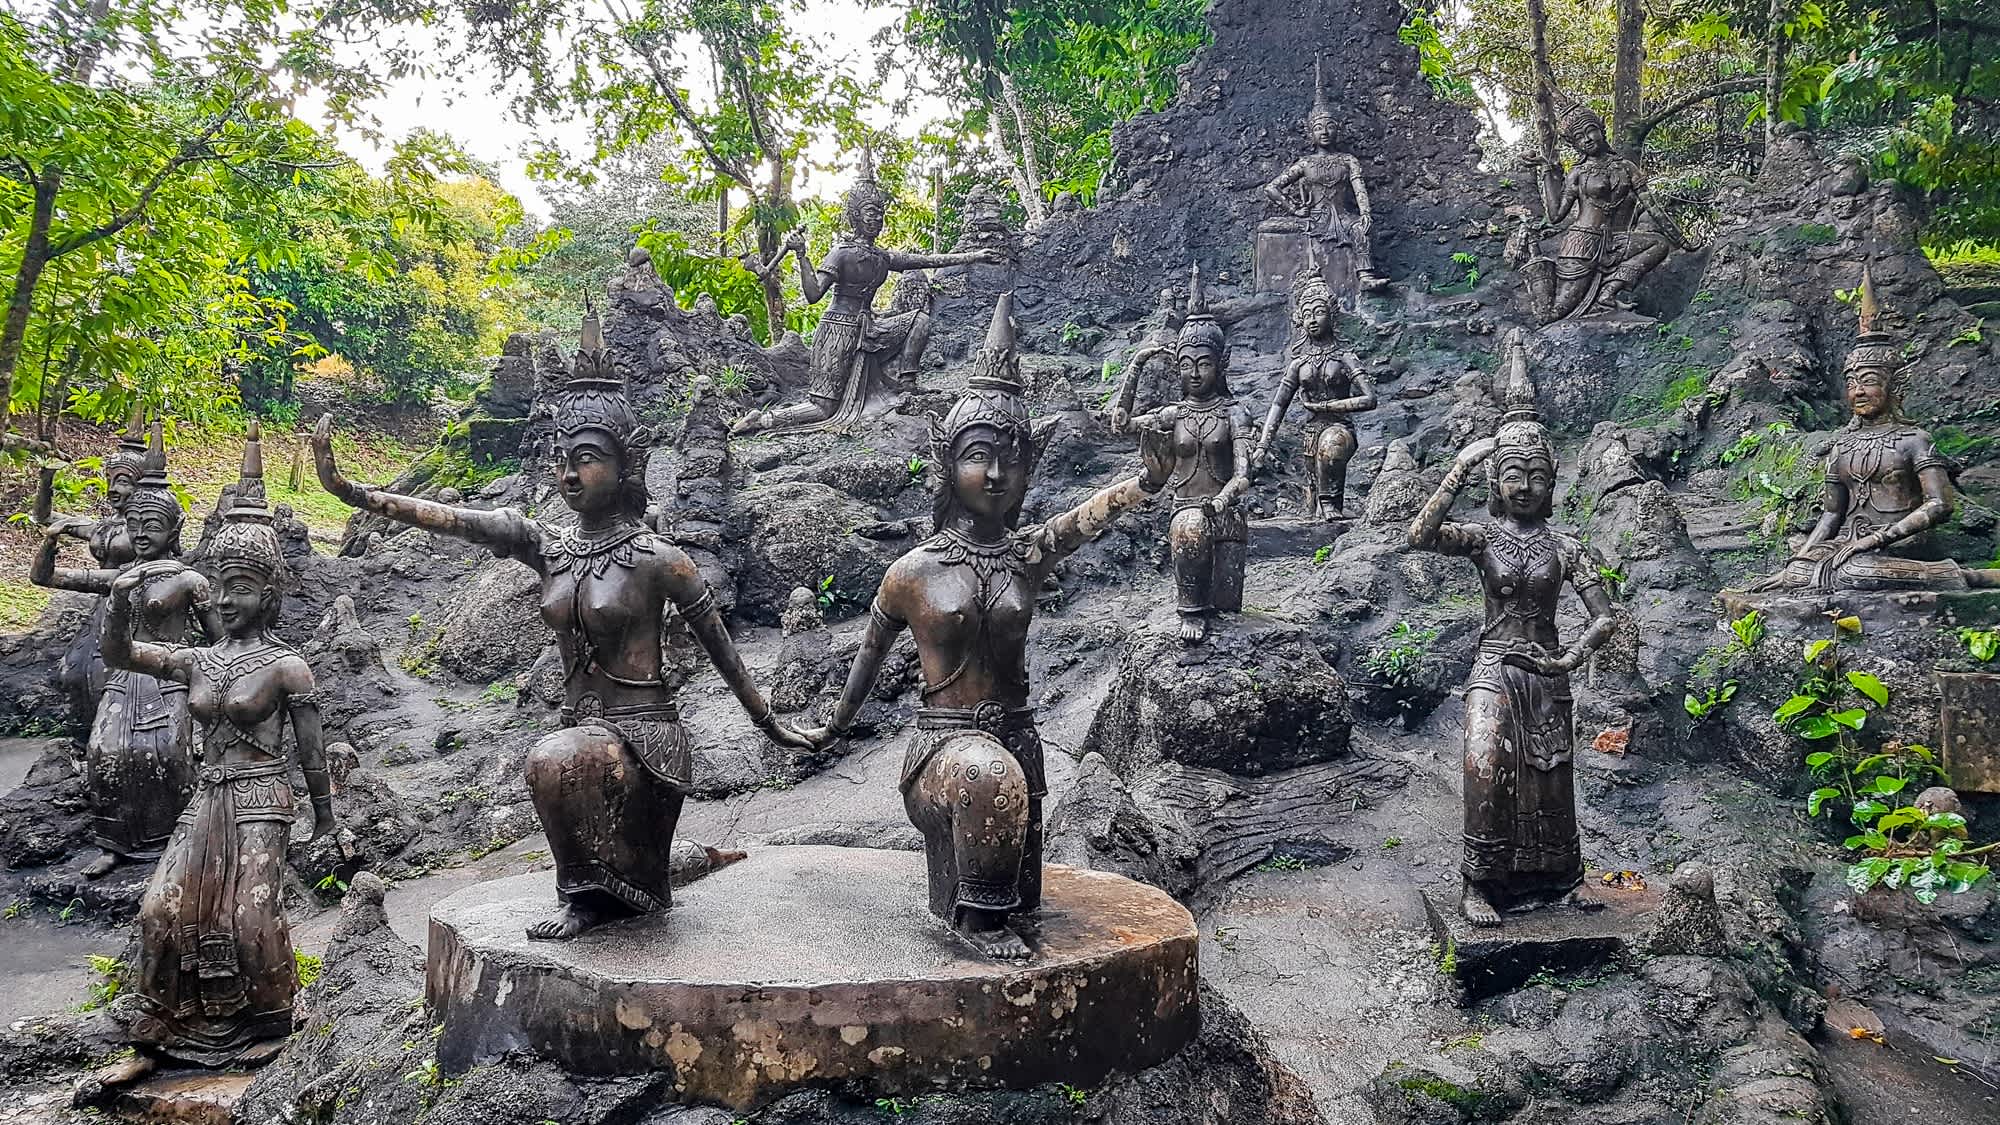 Buddha-Statuen im Secret Magic Garden auf Koh Samui, Surat Thani, Thailand.

